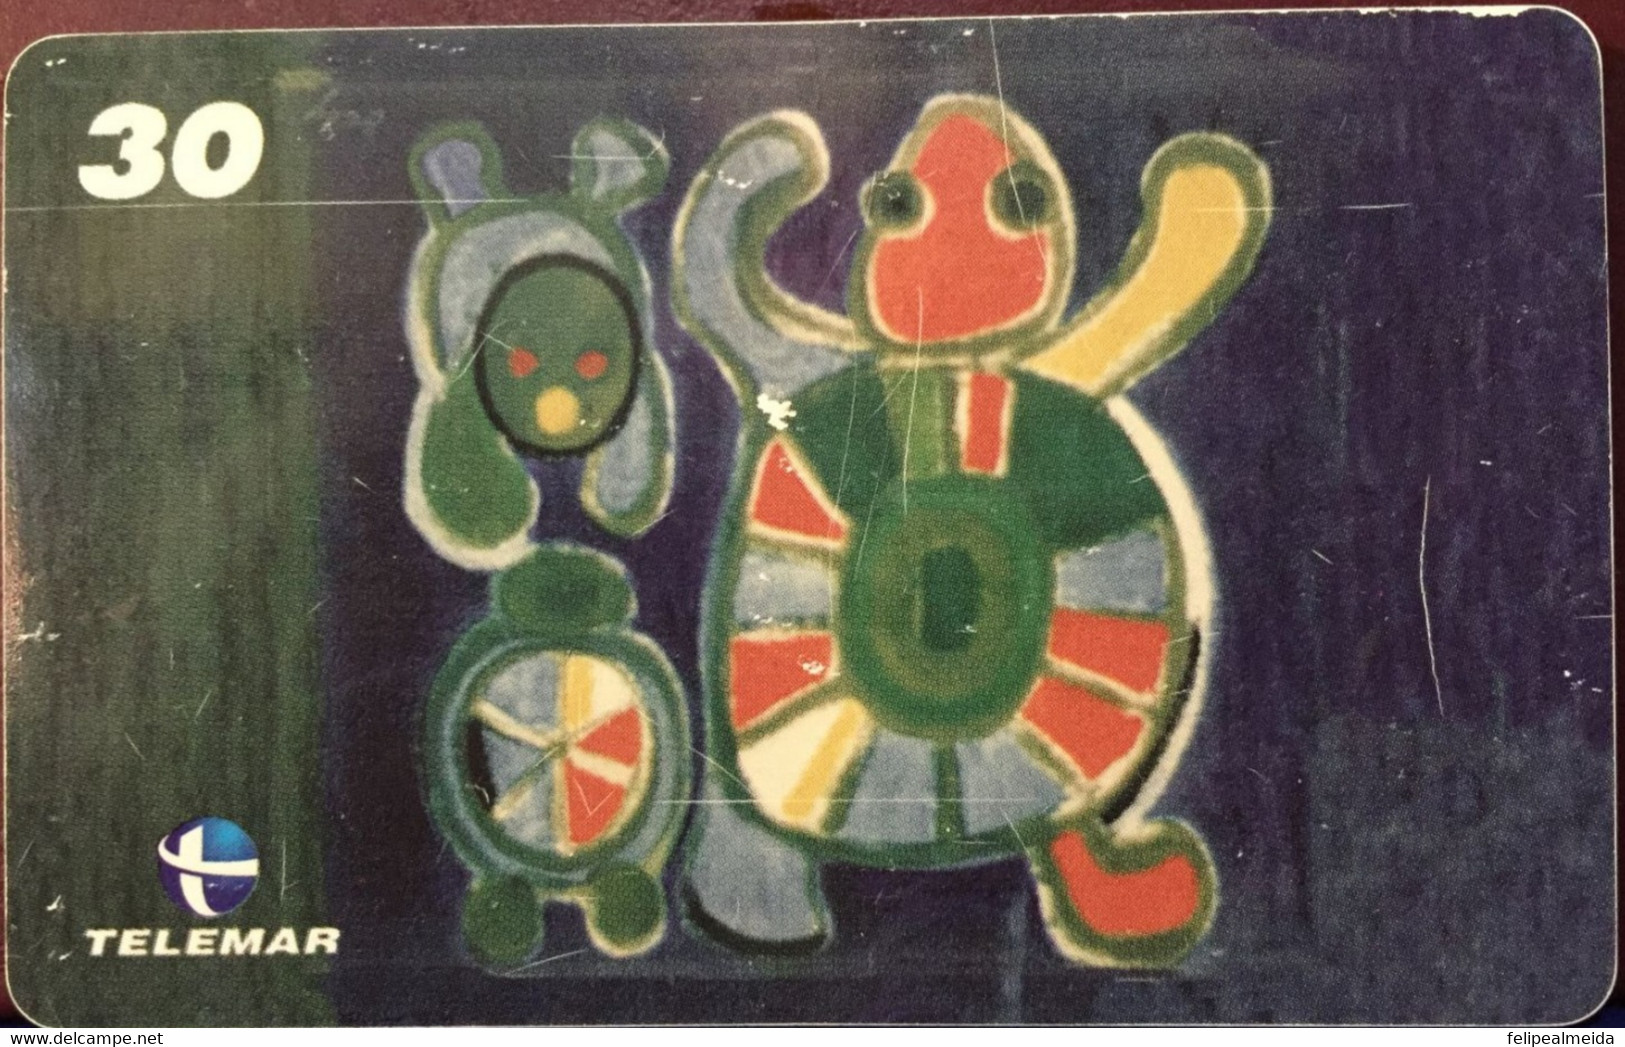 Phone Card Manufactured By Telemar In 2000 - Series A Moment In Brazilian Art - Artist Olly Reinheimer - Schilderijen